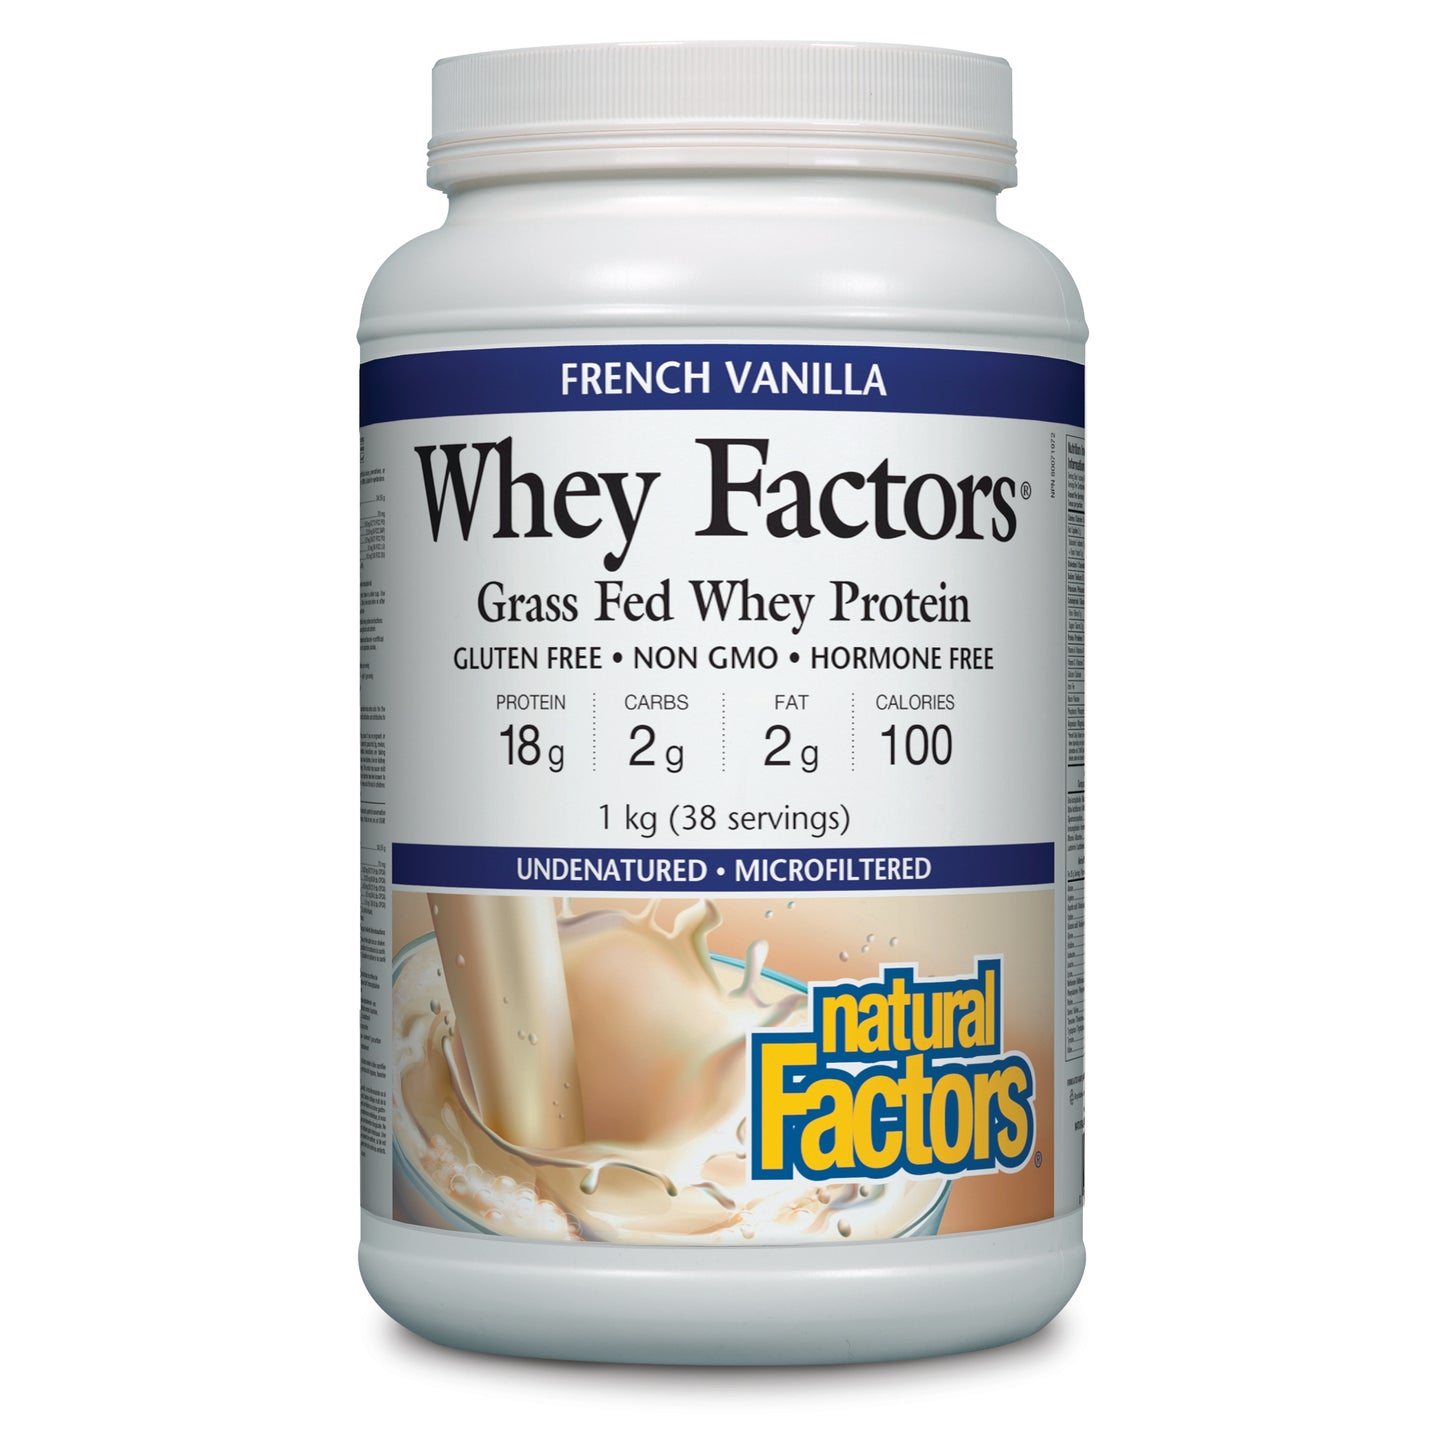 Natural Factors Whey Factors (French Vanilla)